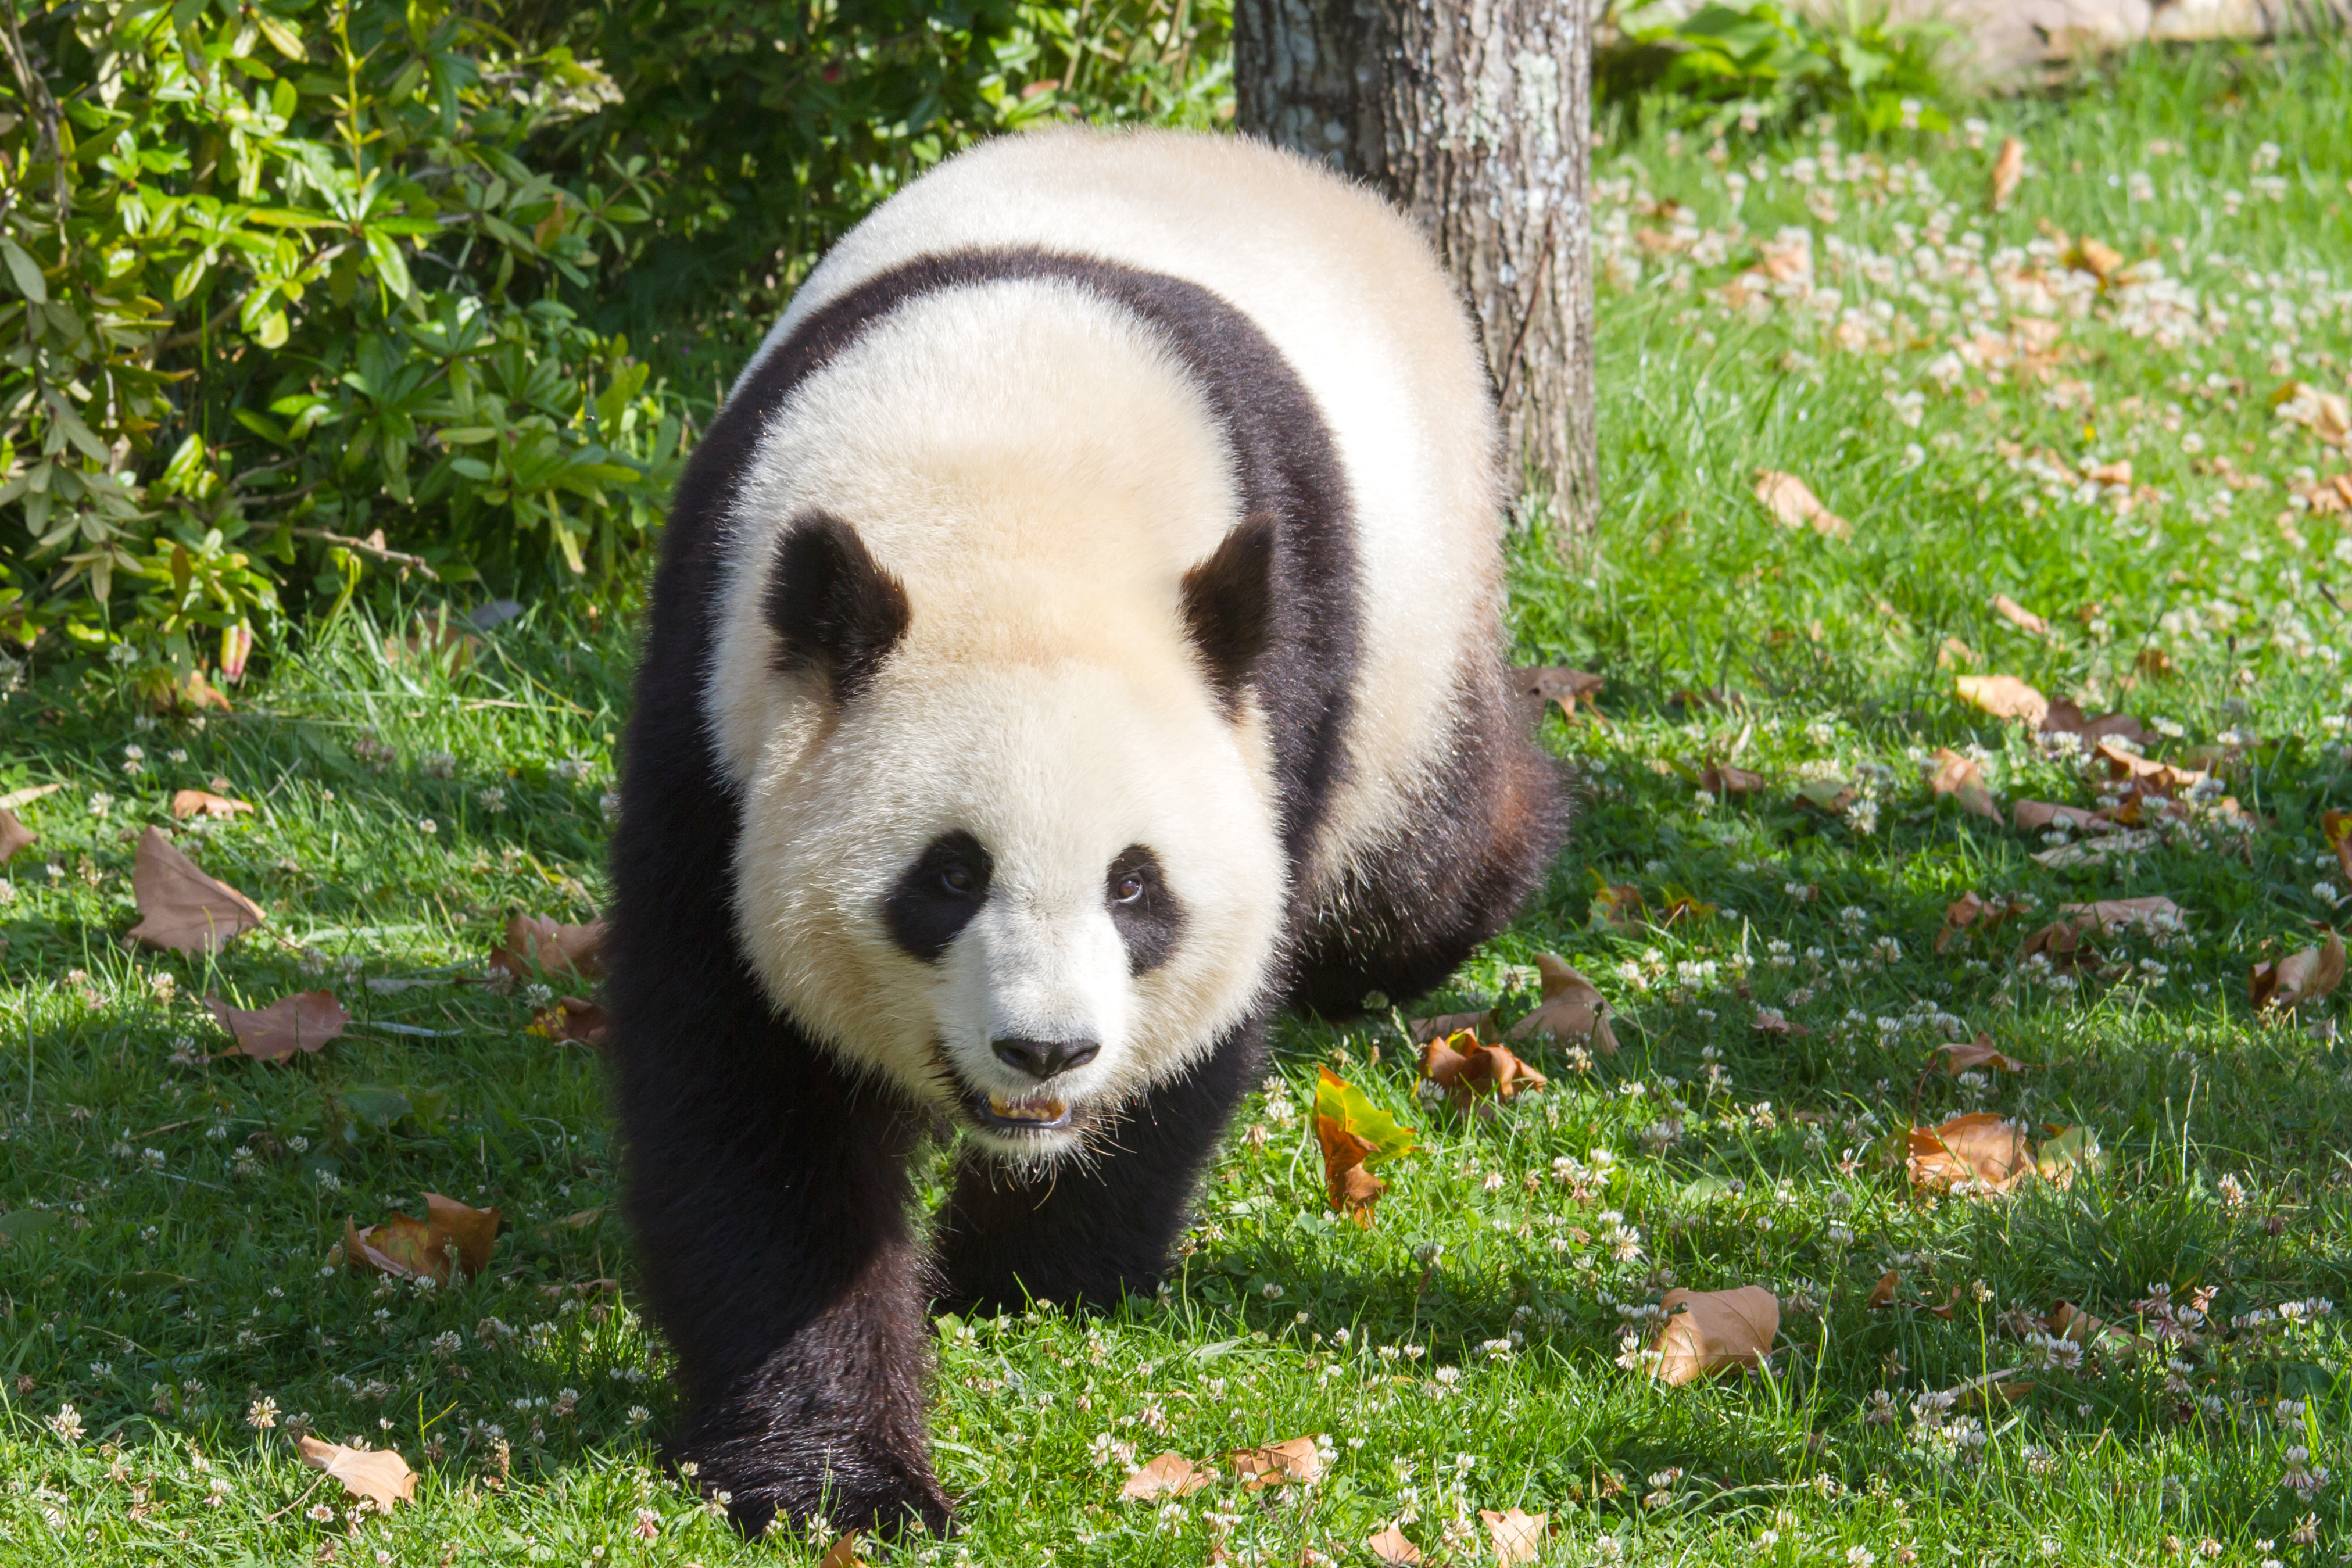 Giant panda photo